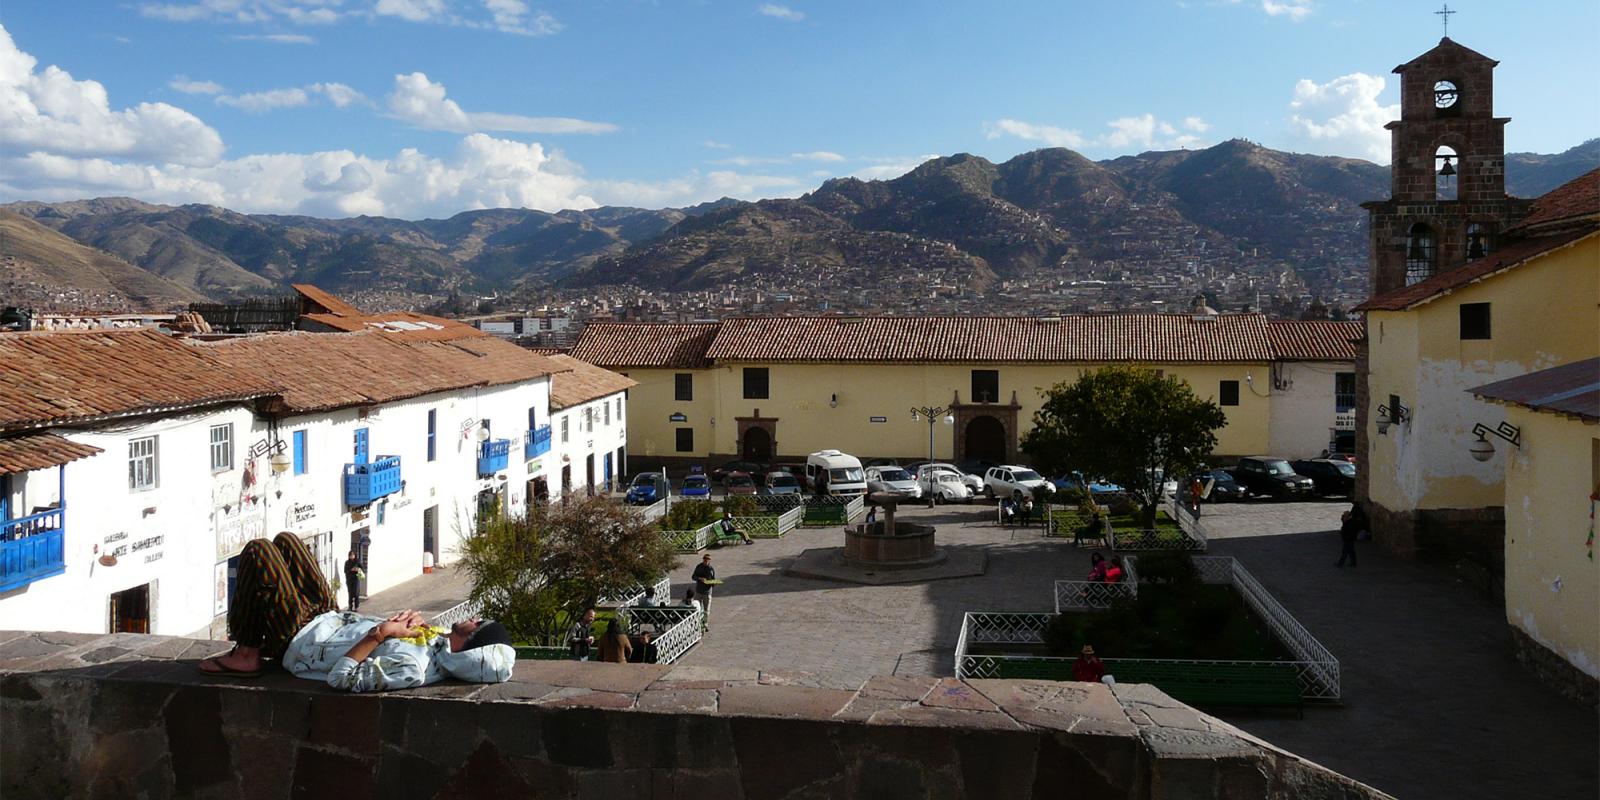 Reisverhalen en tips over Peru: Cuzco, Machu Picchu, Arequipa | Online reismagazine My World is Yours